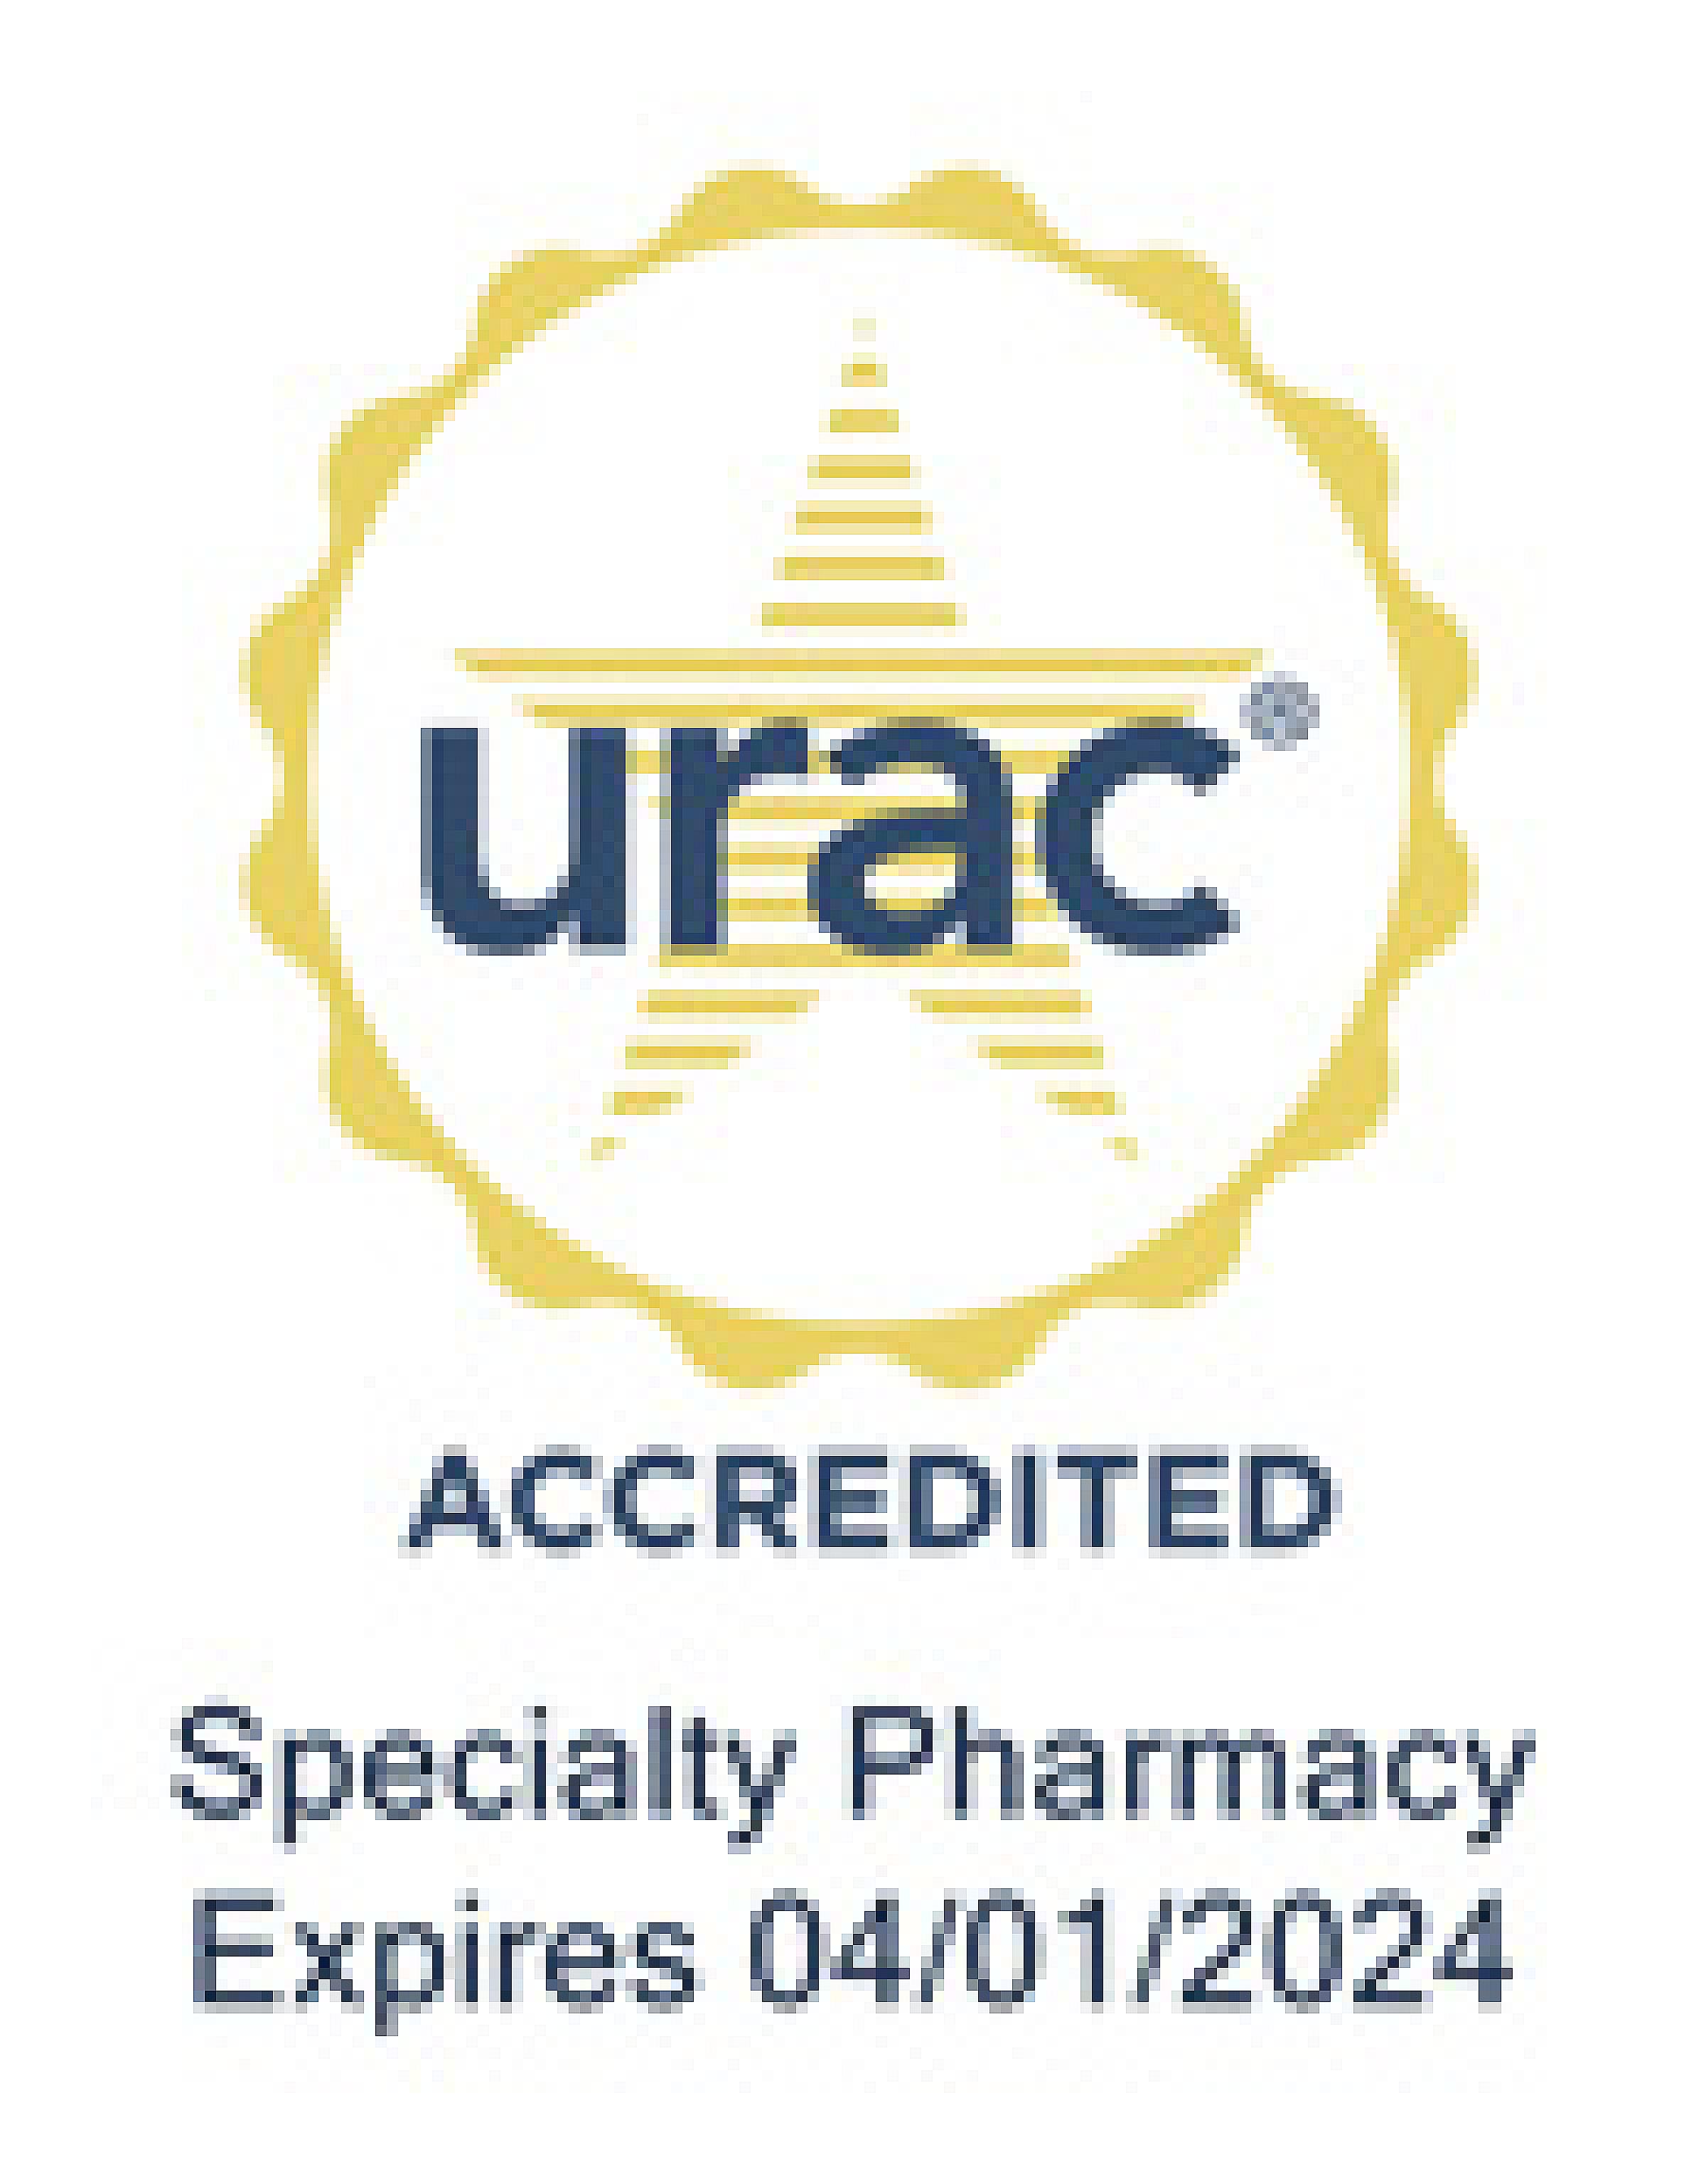 URAC Accreditation Seal